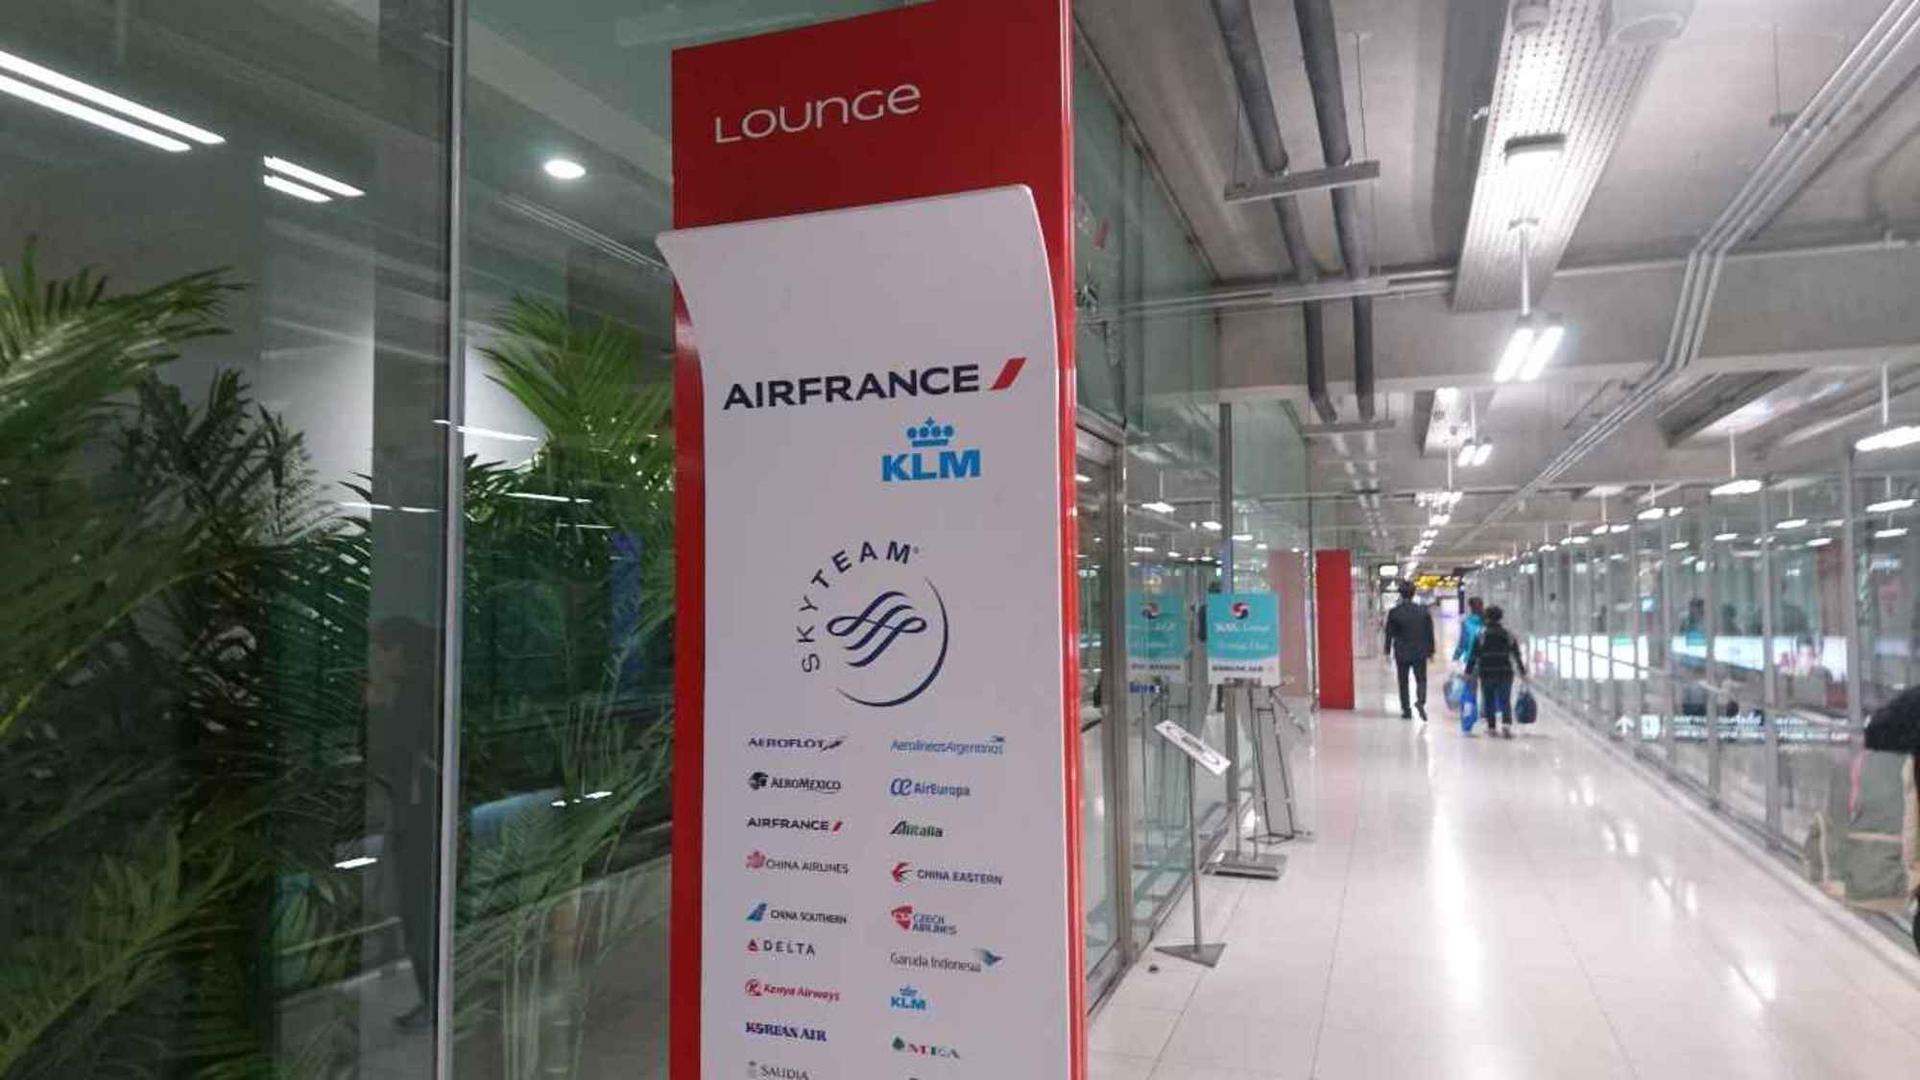 Air France/KLM Lounge image 19 of 28